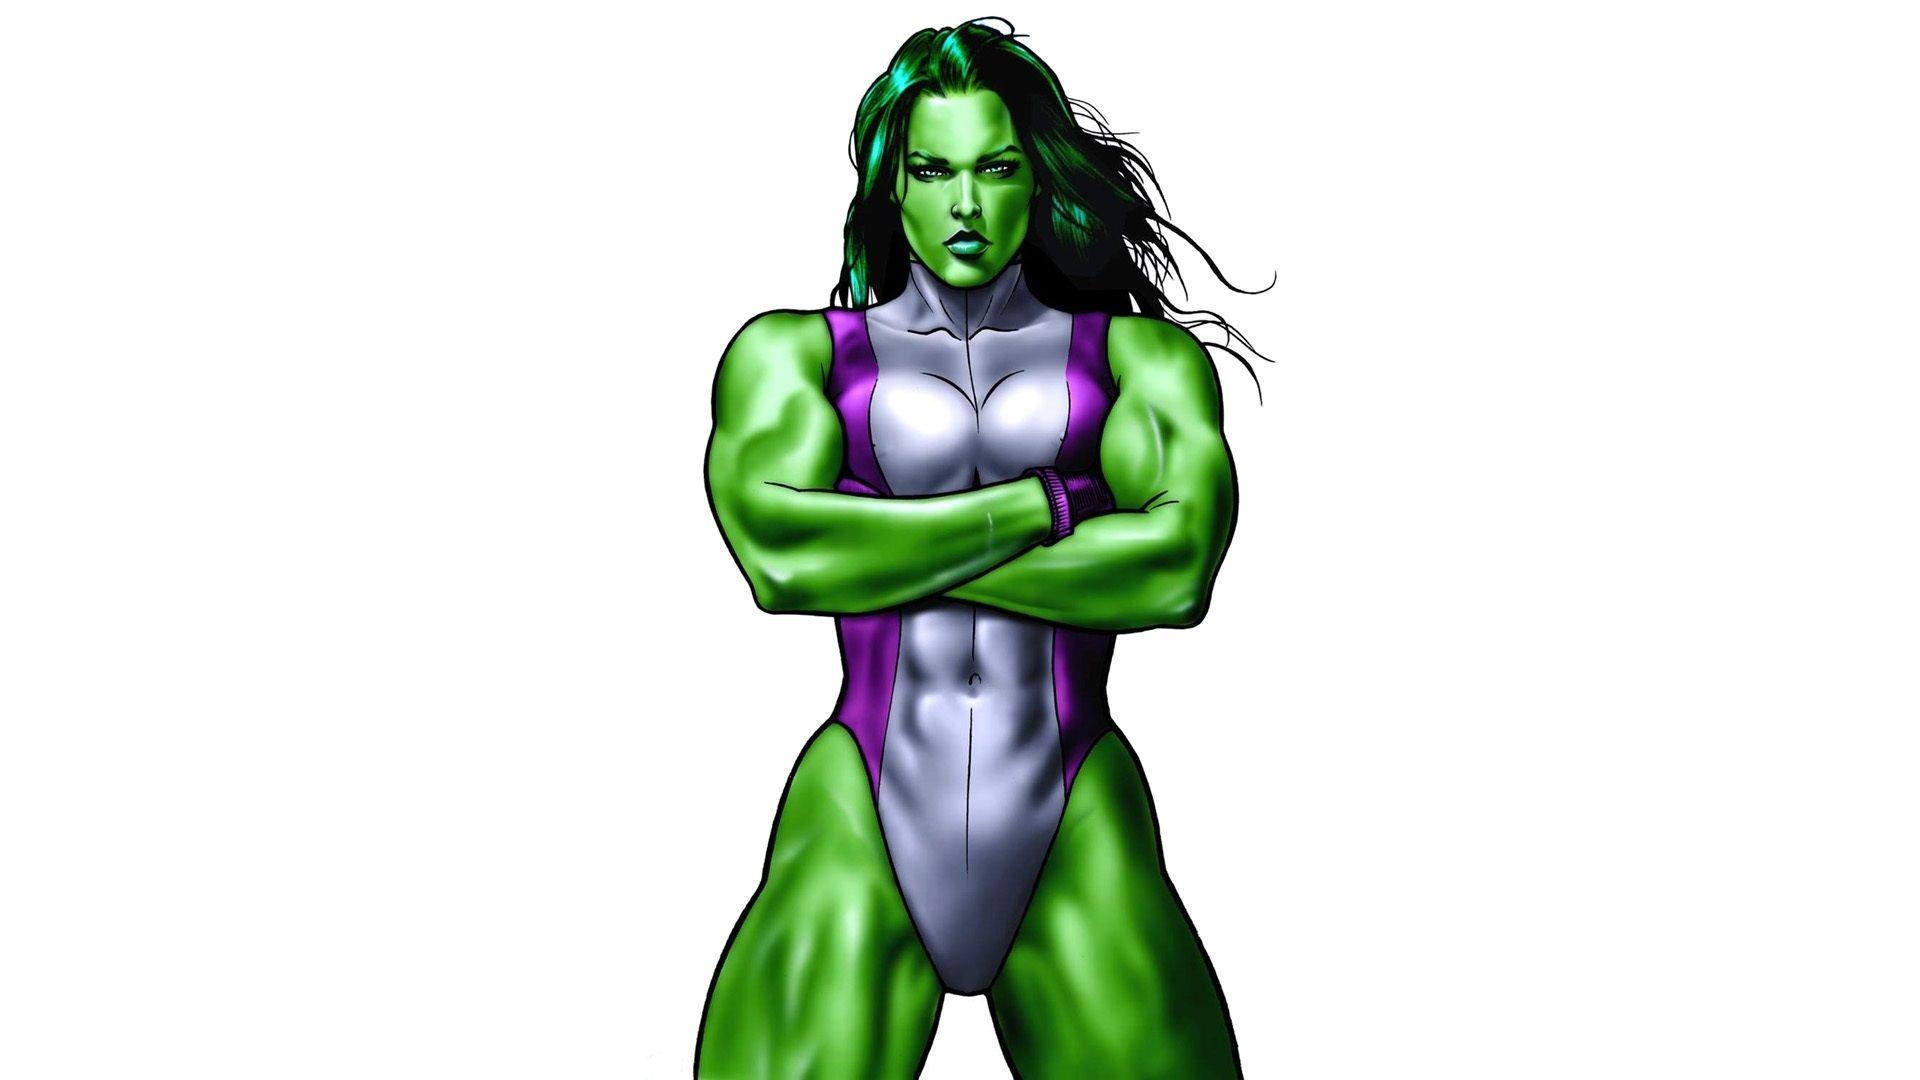 She Hulk Image She Hulk HD Wallpaper And Background Photo